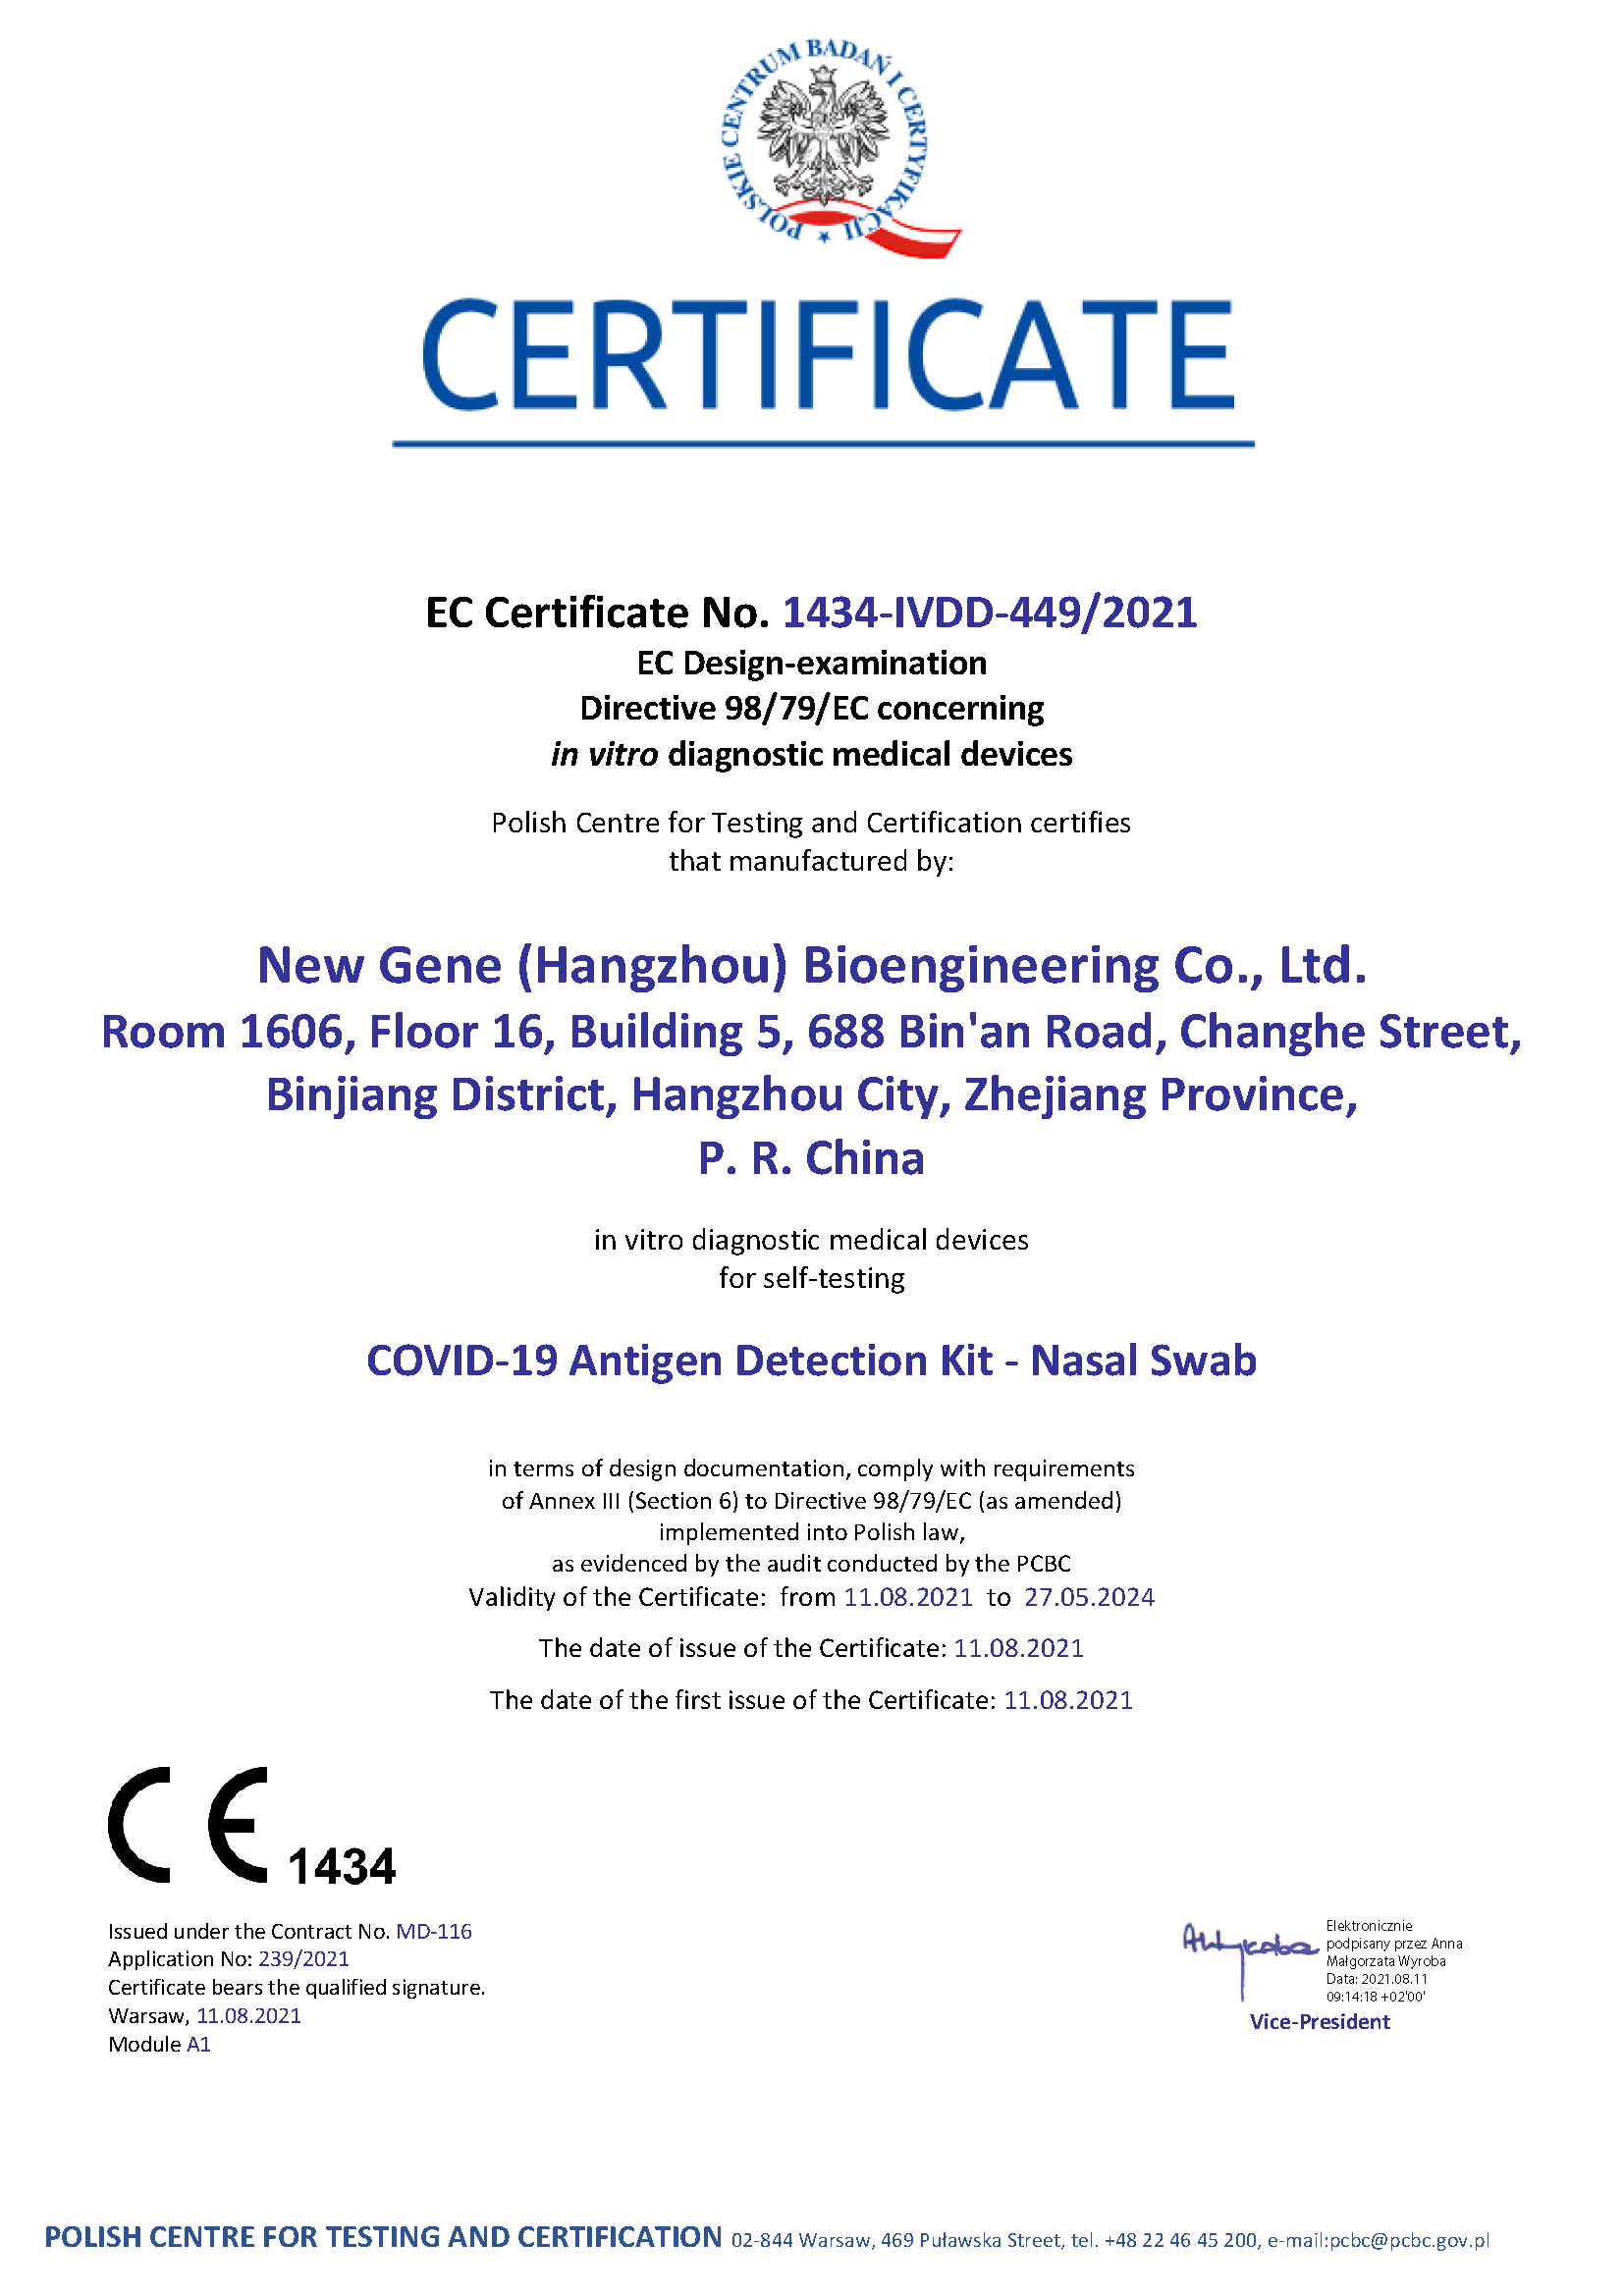 New Gene COVID-19 Antigen Detection Kit - Self Test Certificate (PCBC 1434)